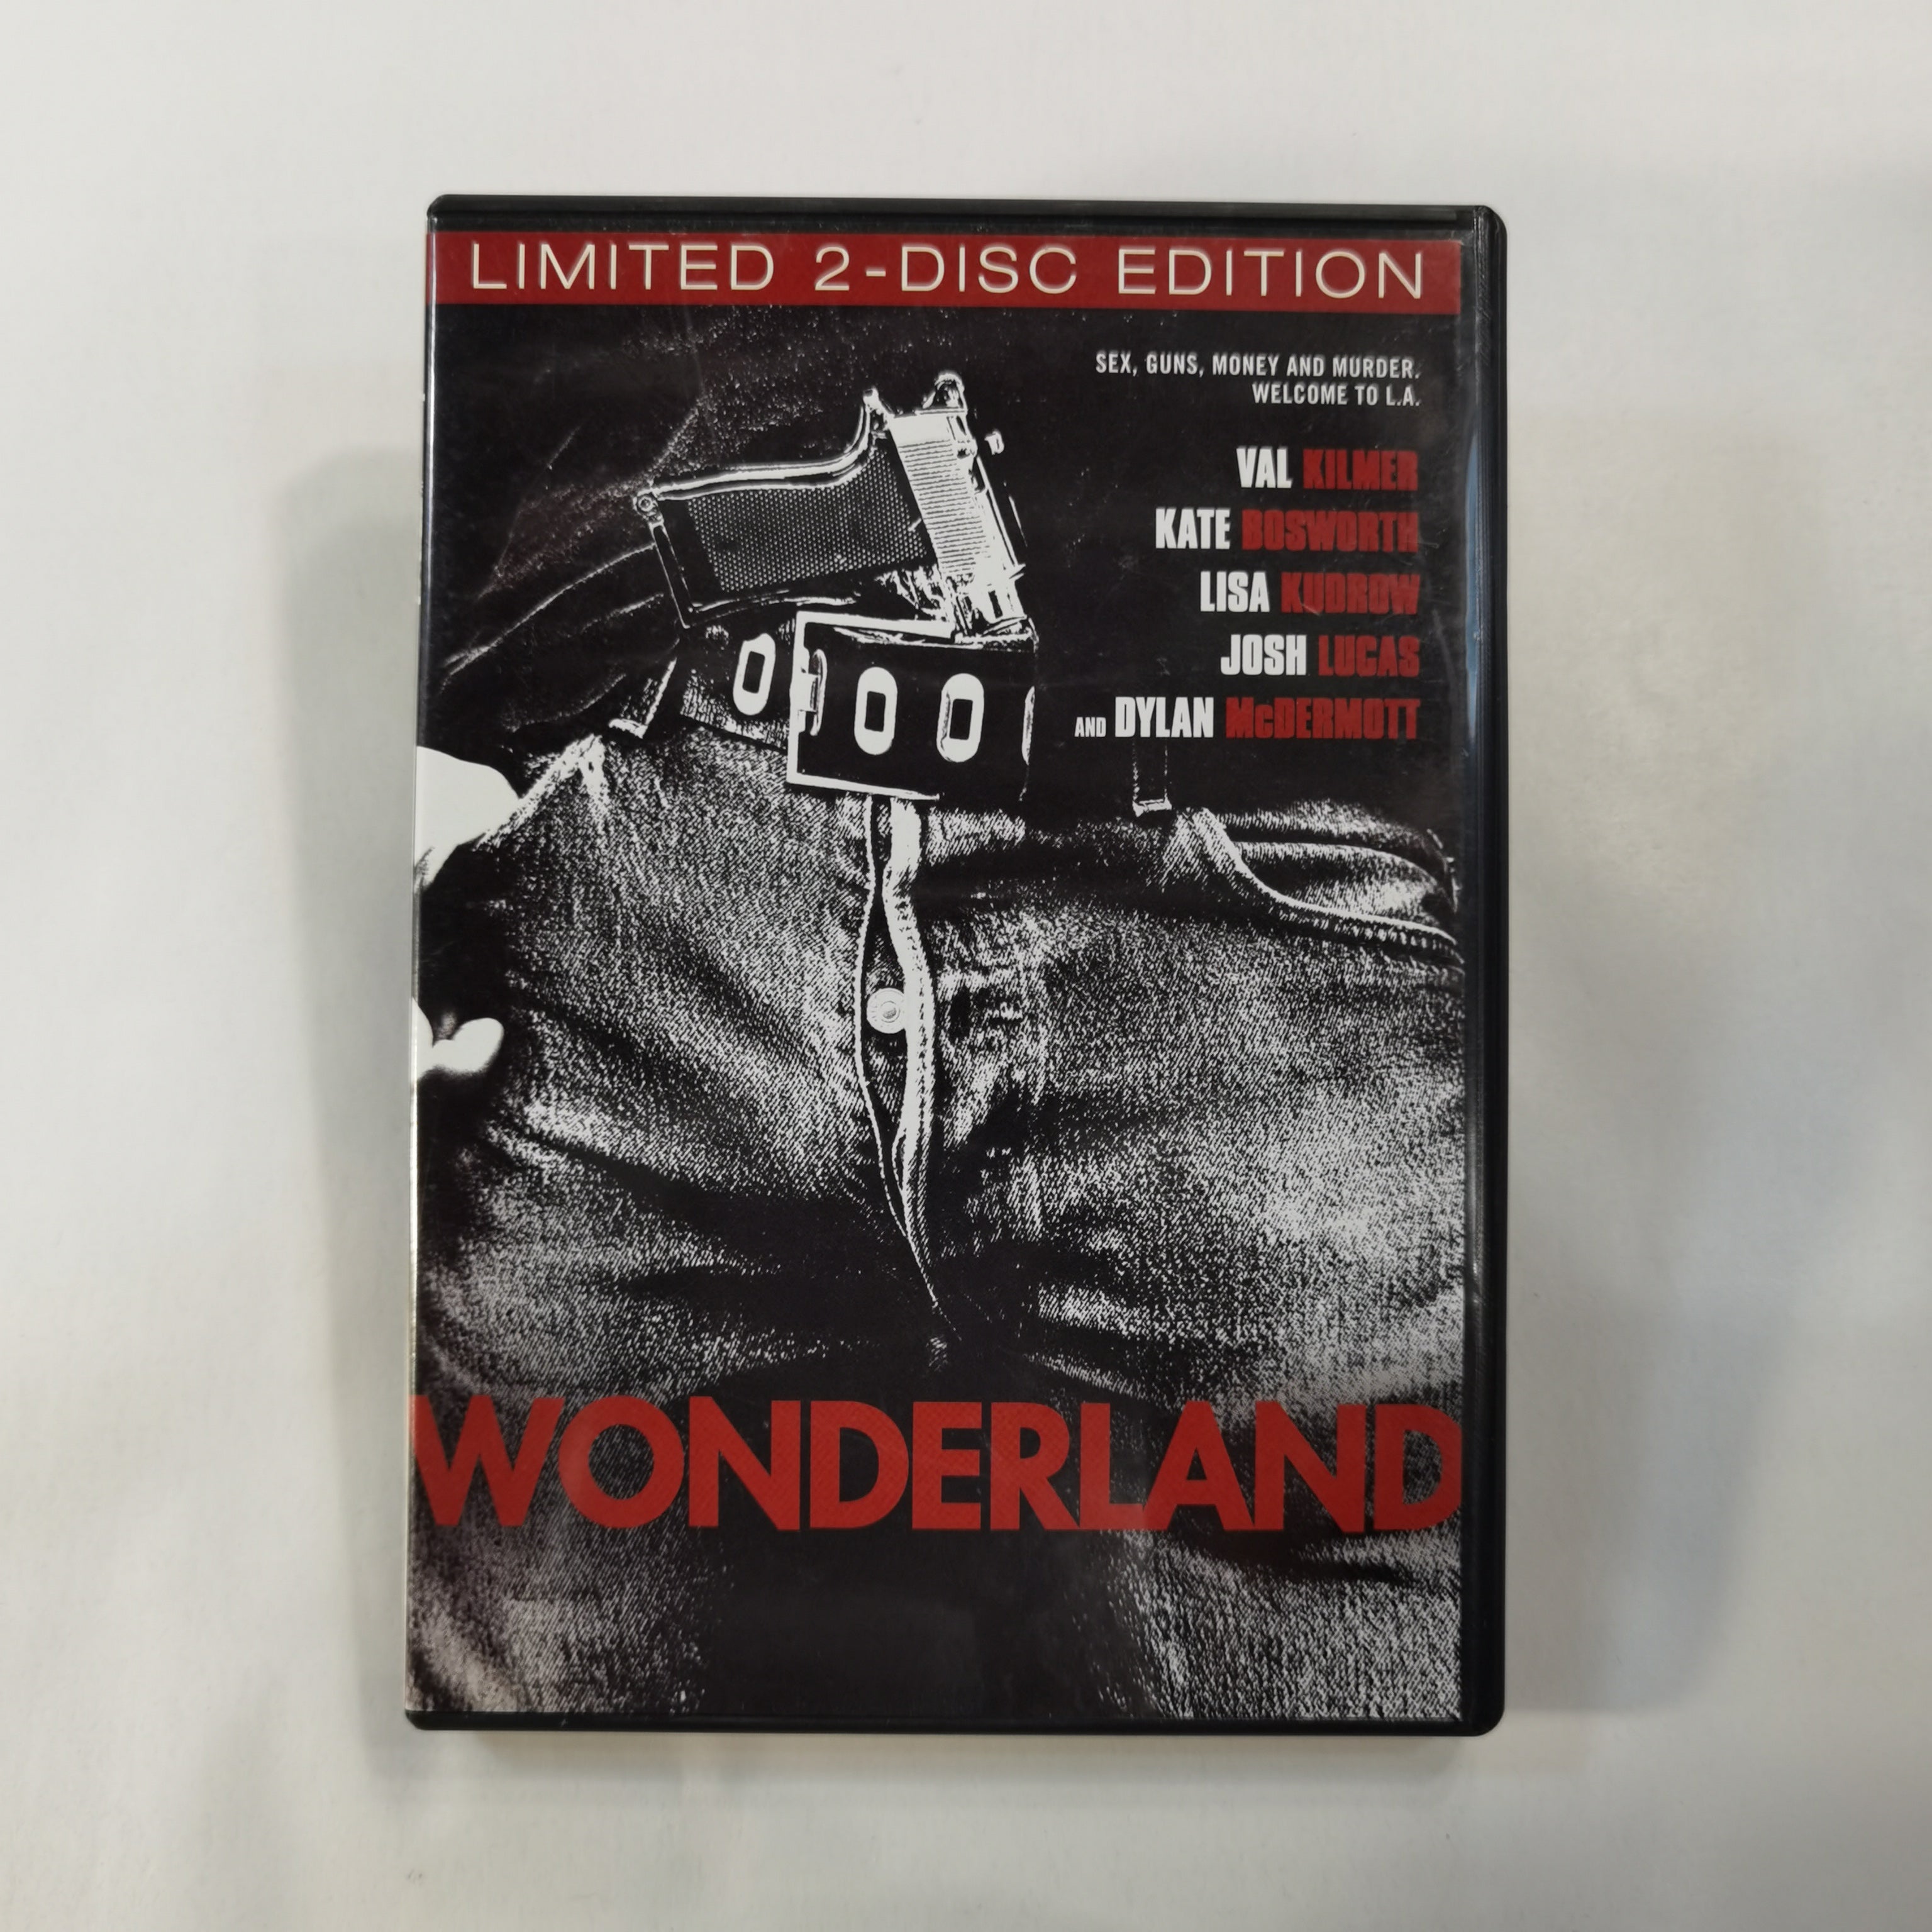 Wonderland (2003) - DVD US 2-Disc Limited Edition